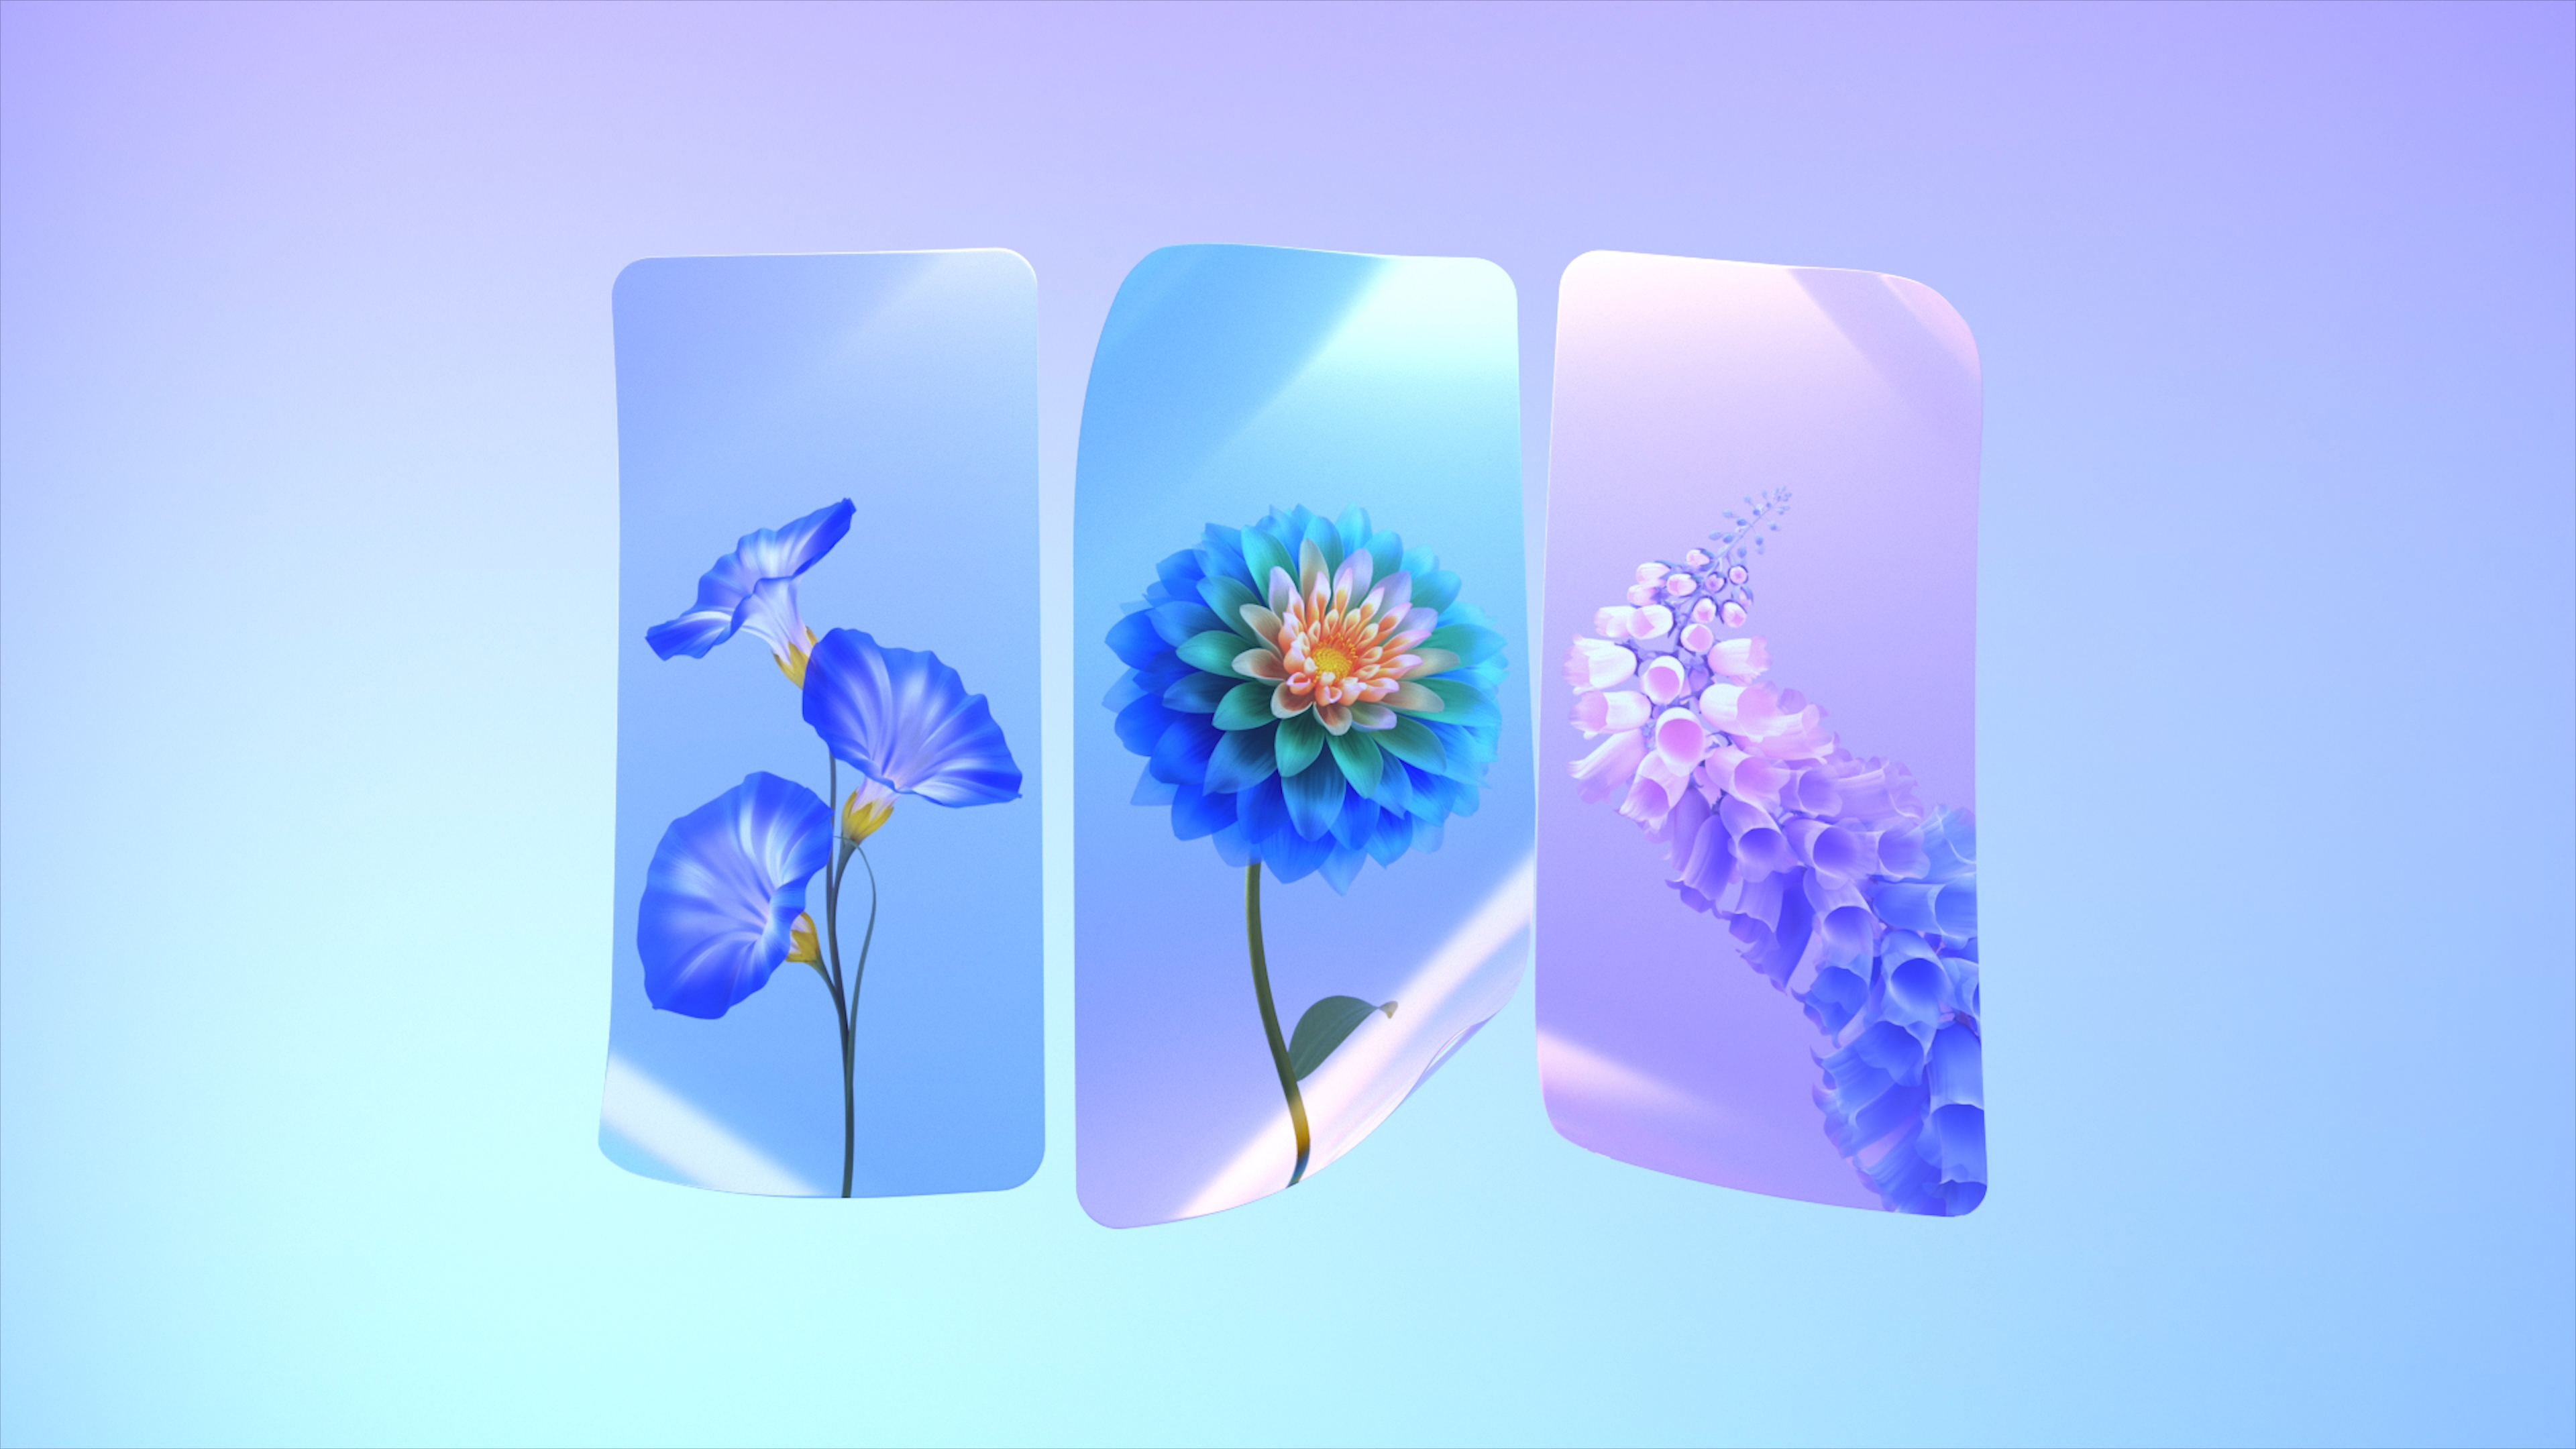 HD wallpaper, Colorful Flowers, Seasons, Spring Flowers, Gradient Background